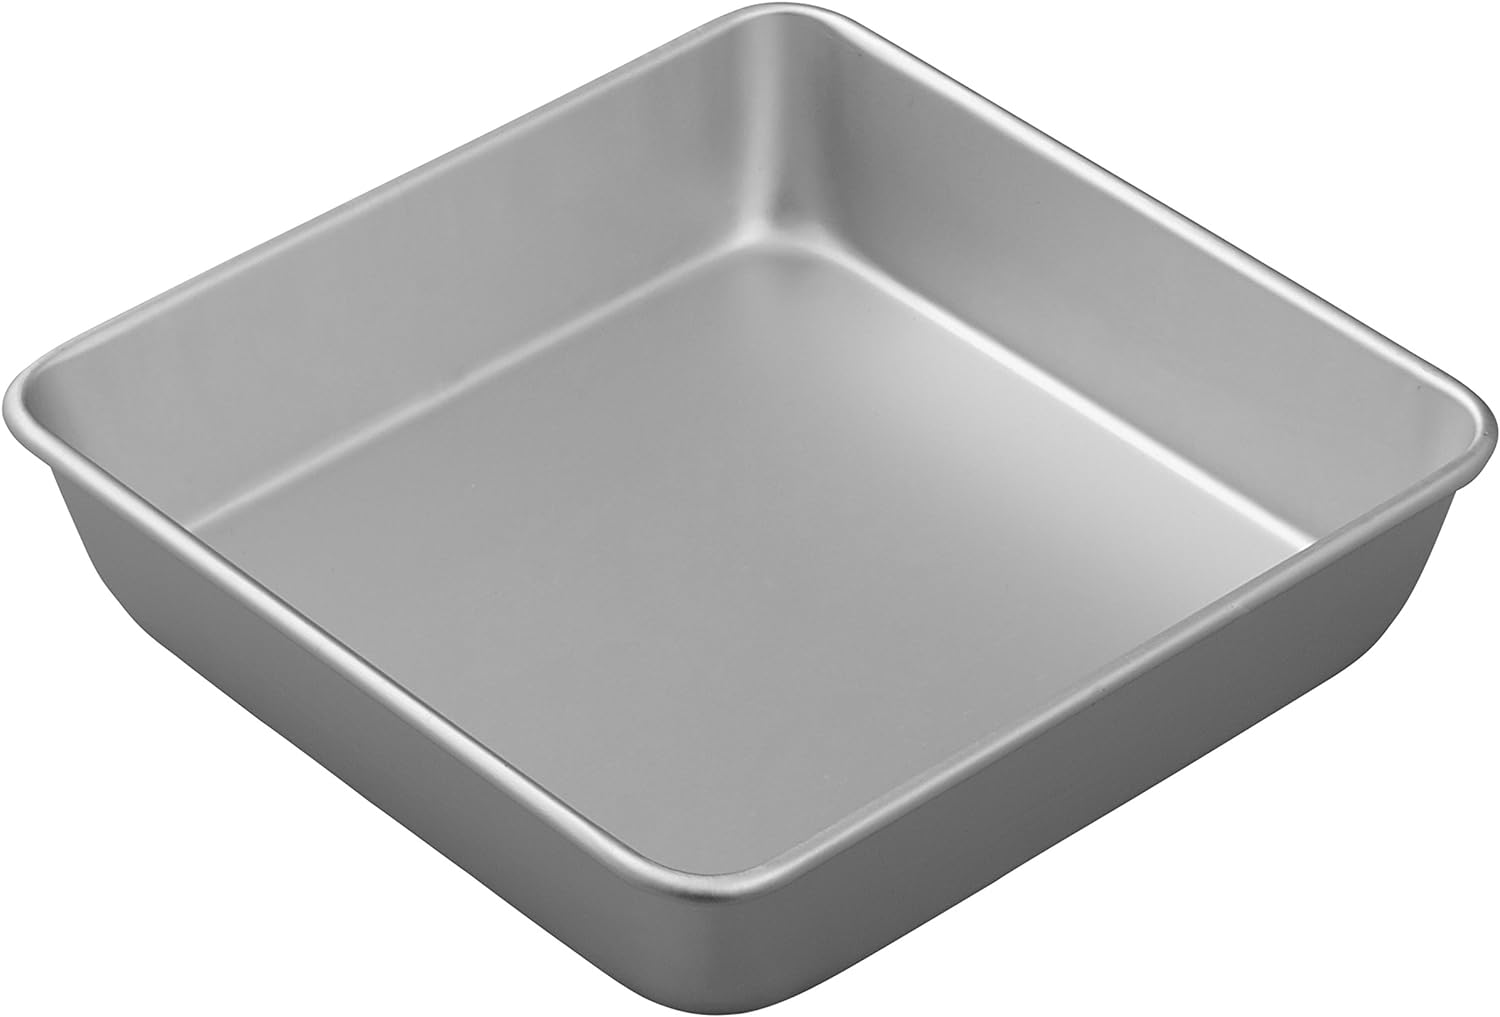 NutriChef Aluminum Non-Stick Square Cake Pan